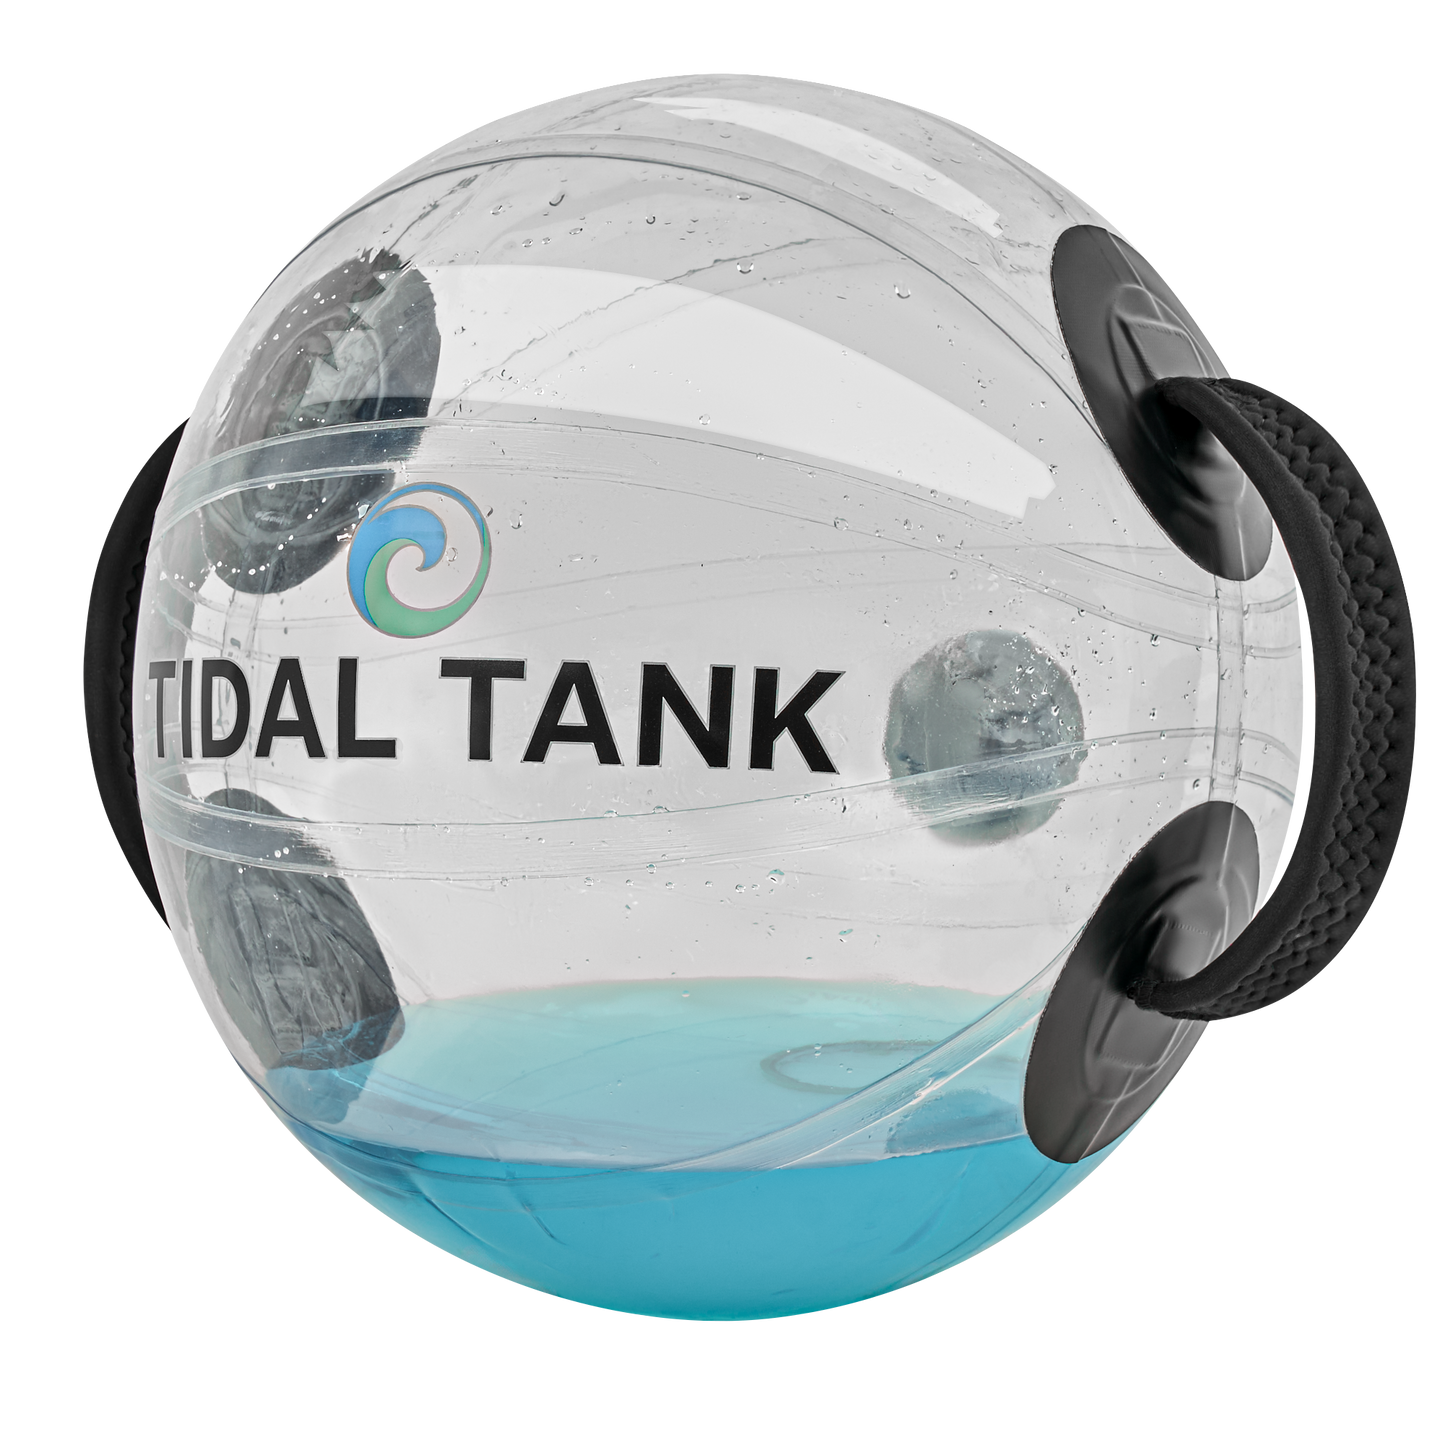 Tidal Tank